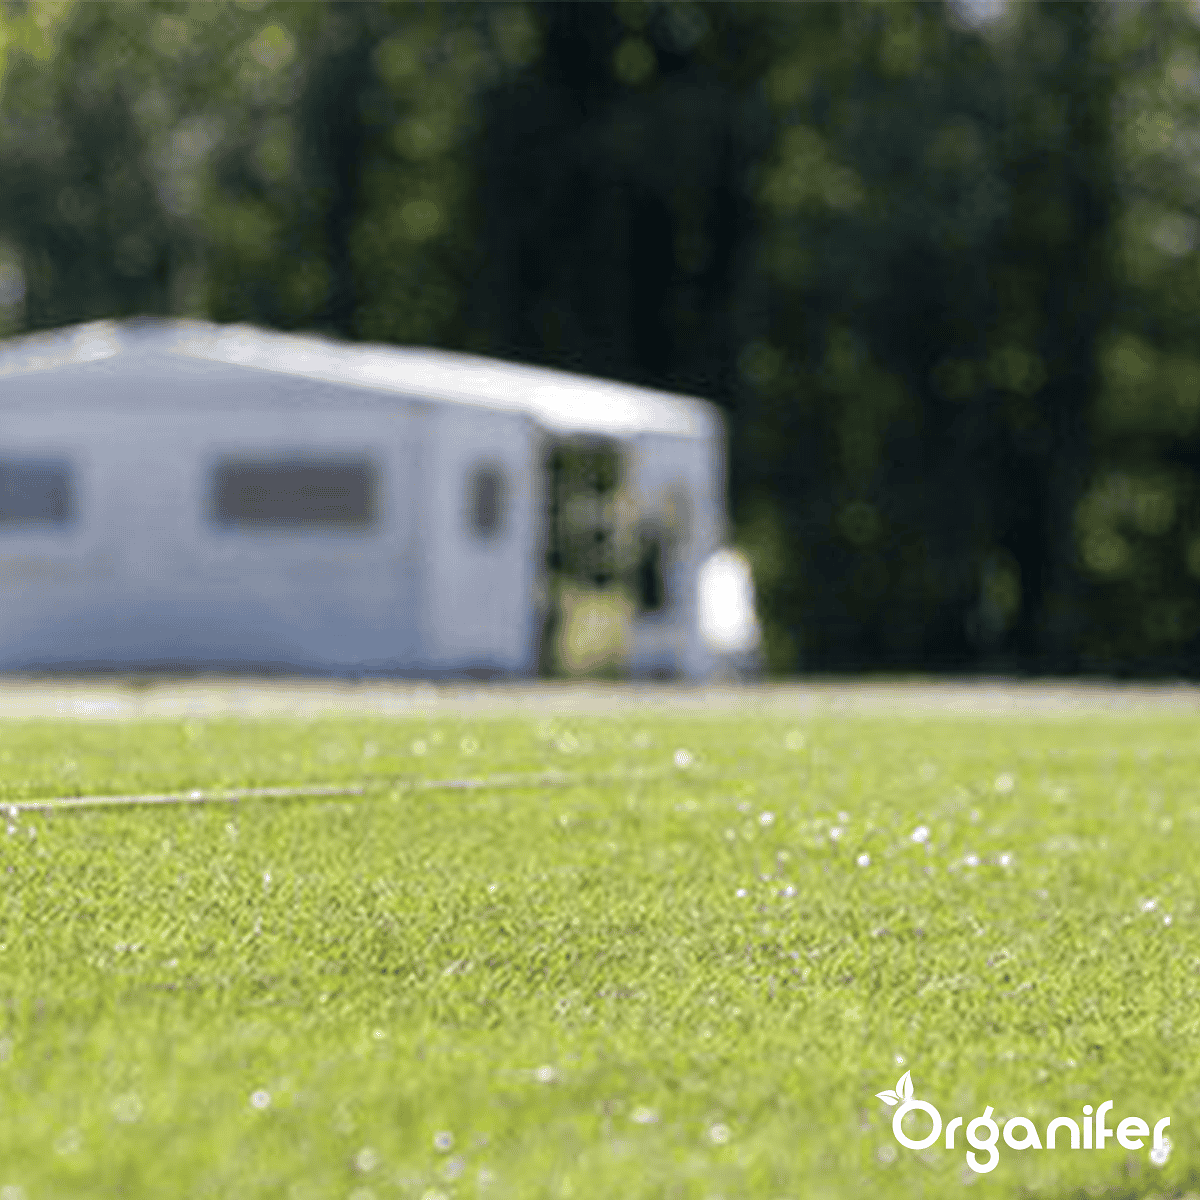 Organifer - Speelgazon Graszaad – Resilient (15 kg voor 750 m2)